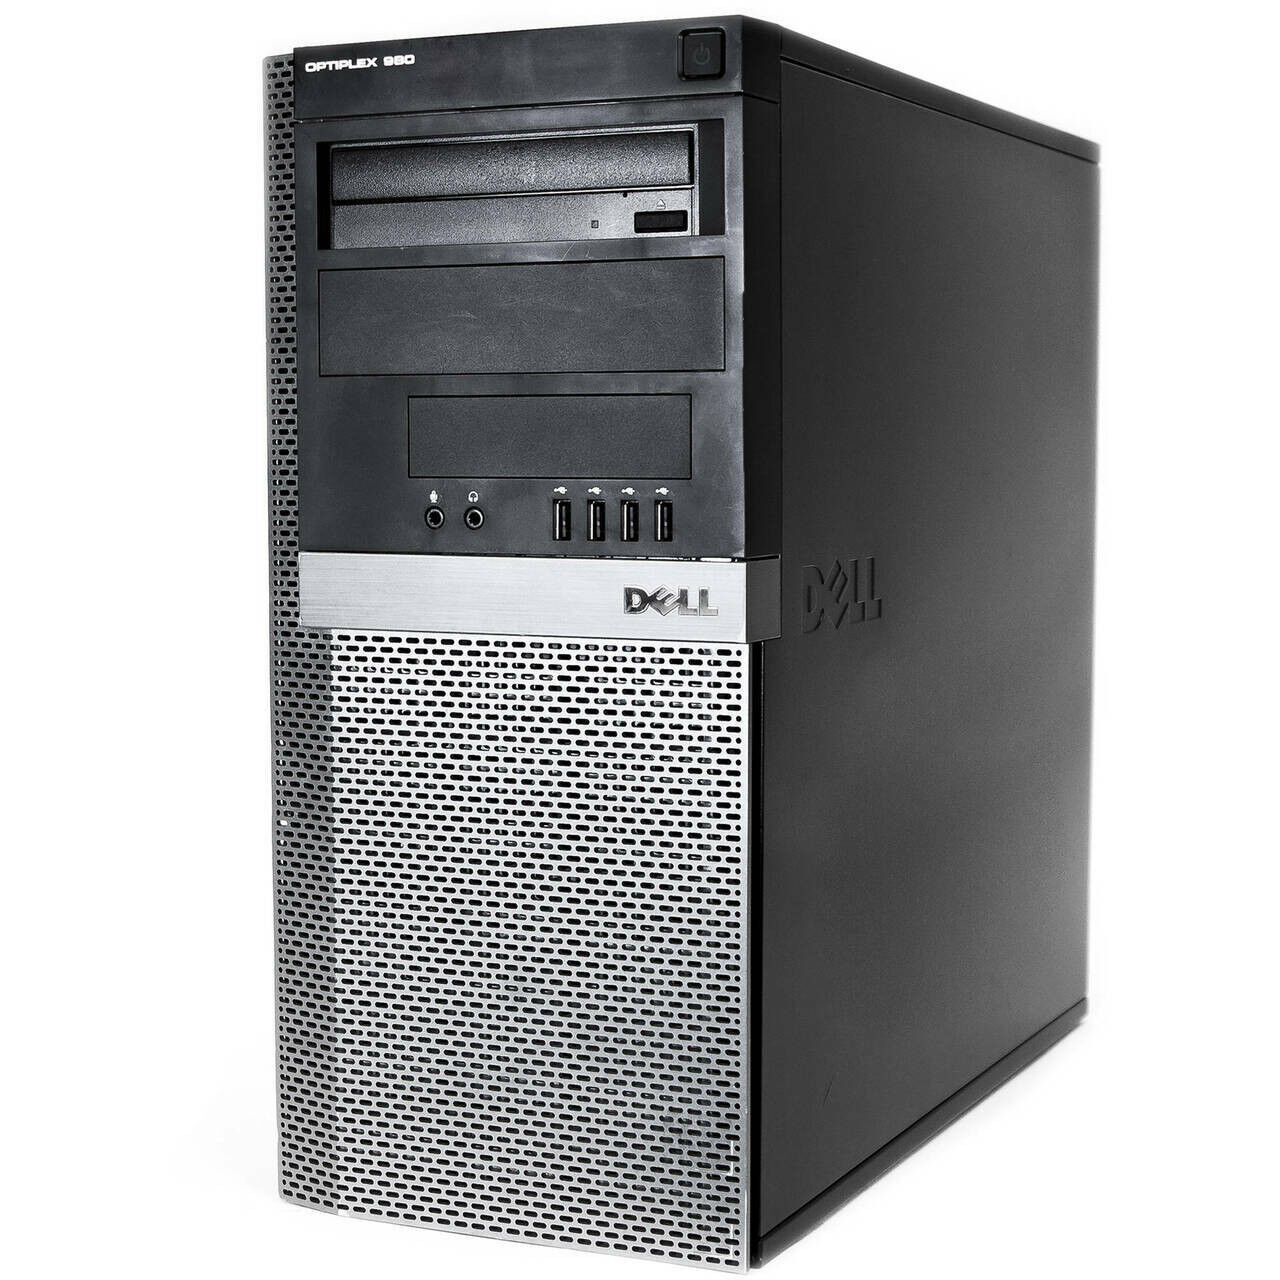 Dell OptiPlex 980 Tower Computer: Intel Core i7 (1st Gen), Windows 10, WiFi